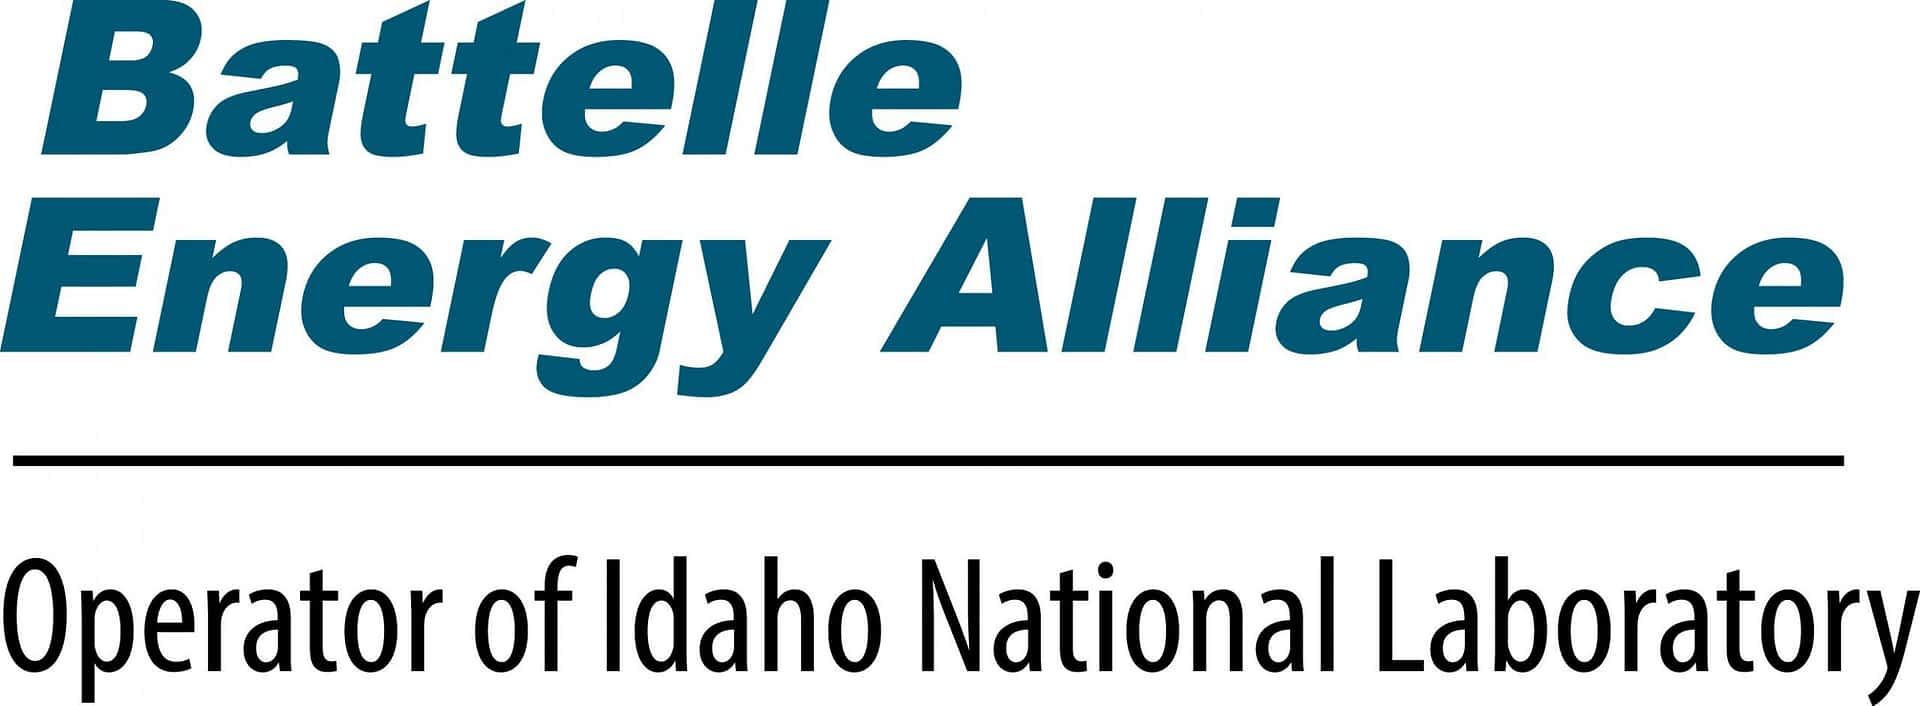 Battelle Energy Alliance - Laboratorio Nacional de Idaho